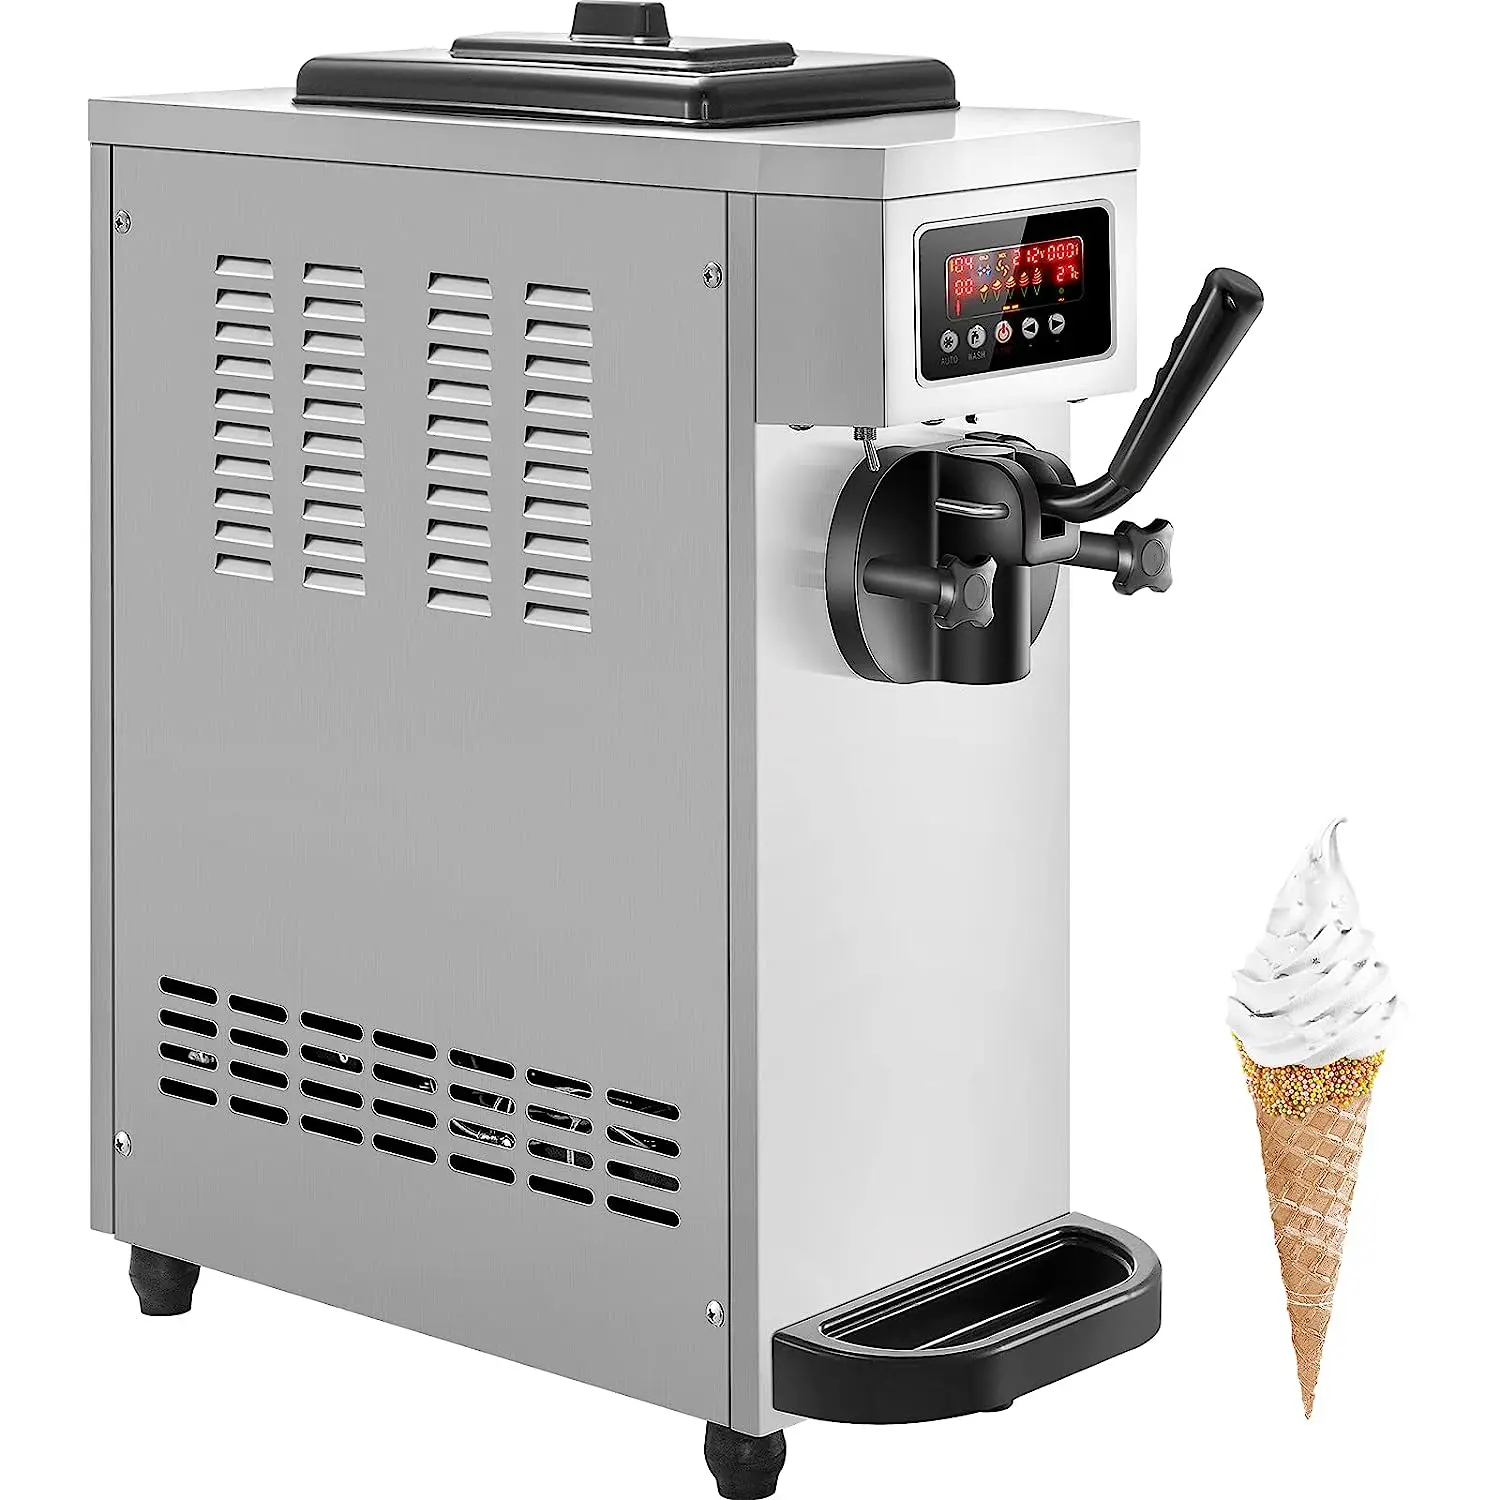 https://ae01.alicdn.com/kf/S2a54255b38564788a60fc2afa4d3233cW/VEVOR-New-Commercial-Ice-Cream-Maker-Single-Flavor-Commercial-Ice-Cream-Machine-4-7-5-3.jpg